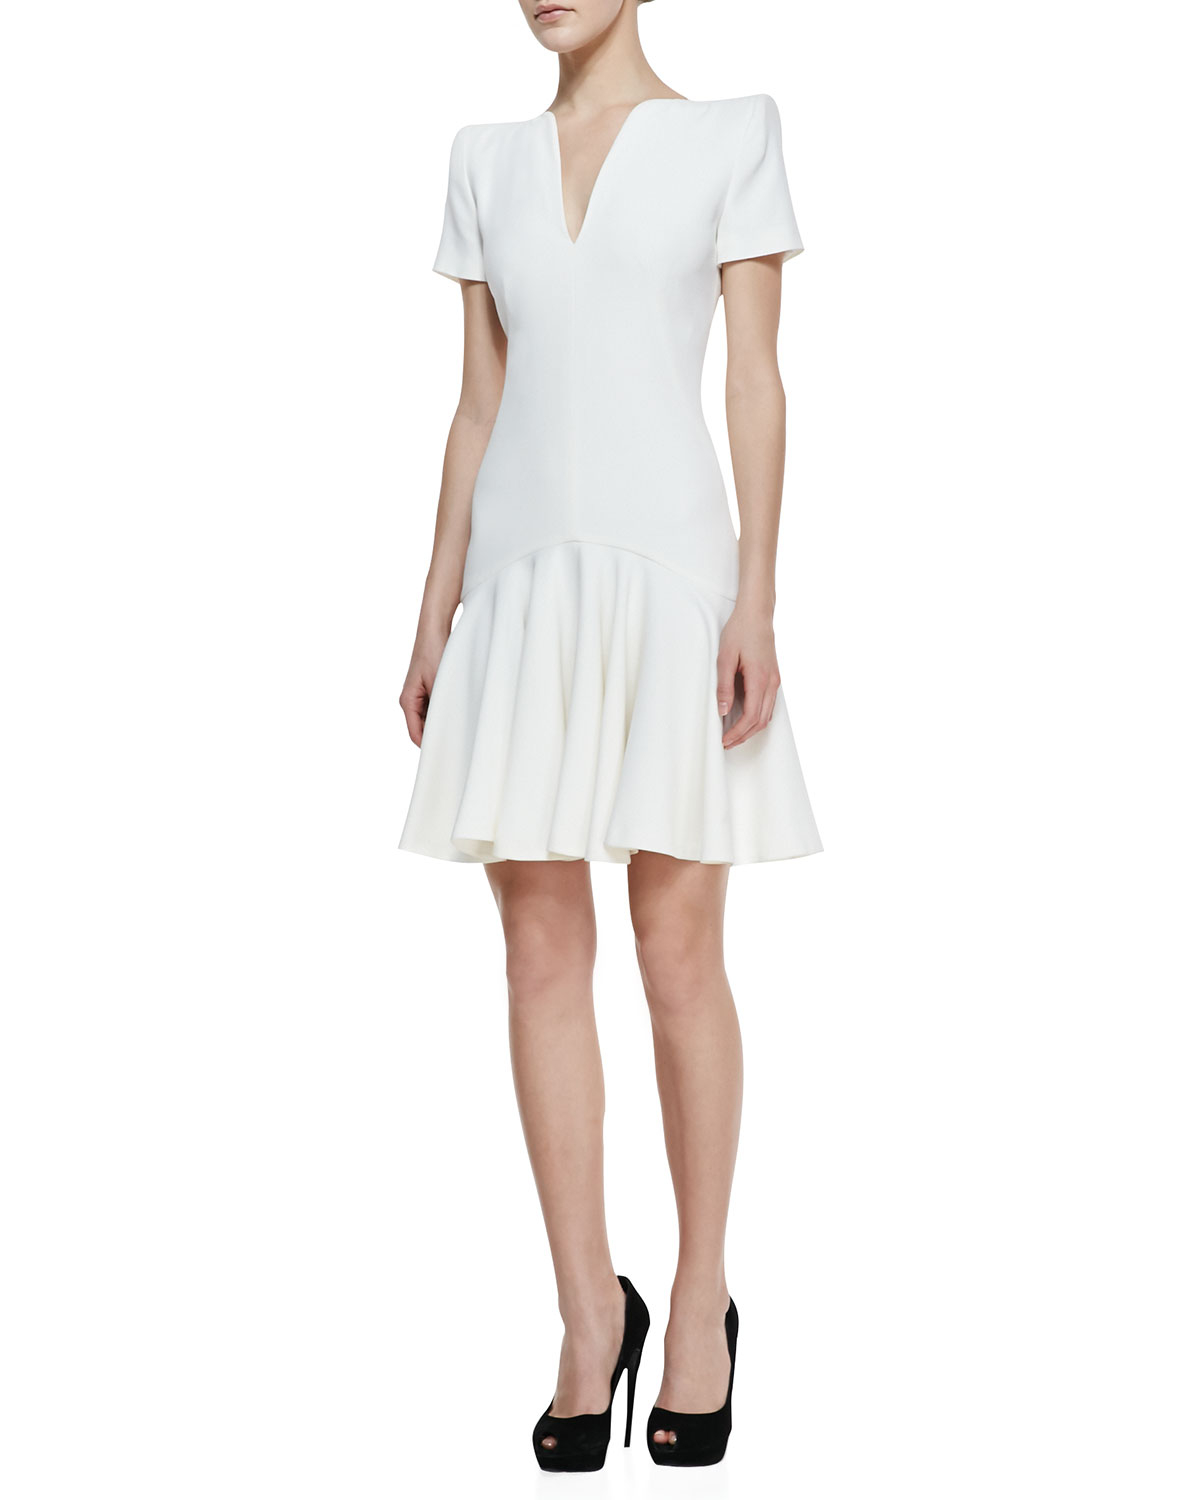 Lyst - Alexander mcqueen Splitvneck Dress with Short Sleeves in White